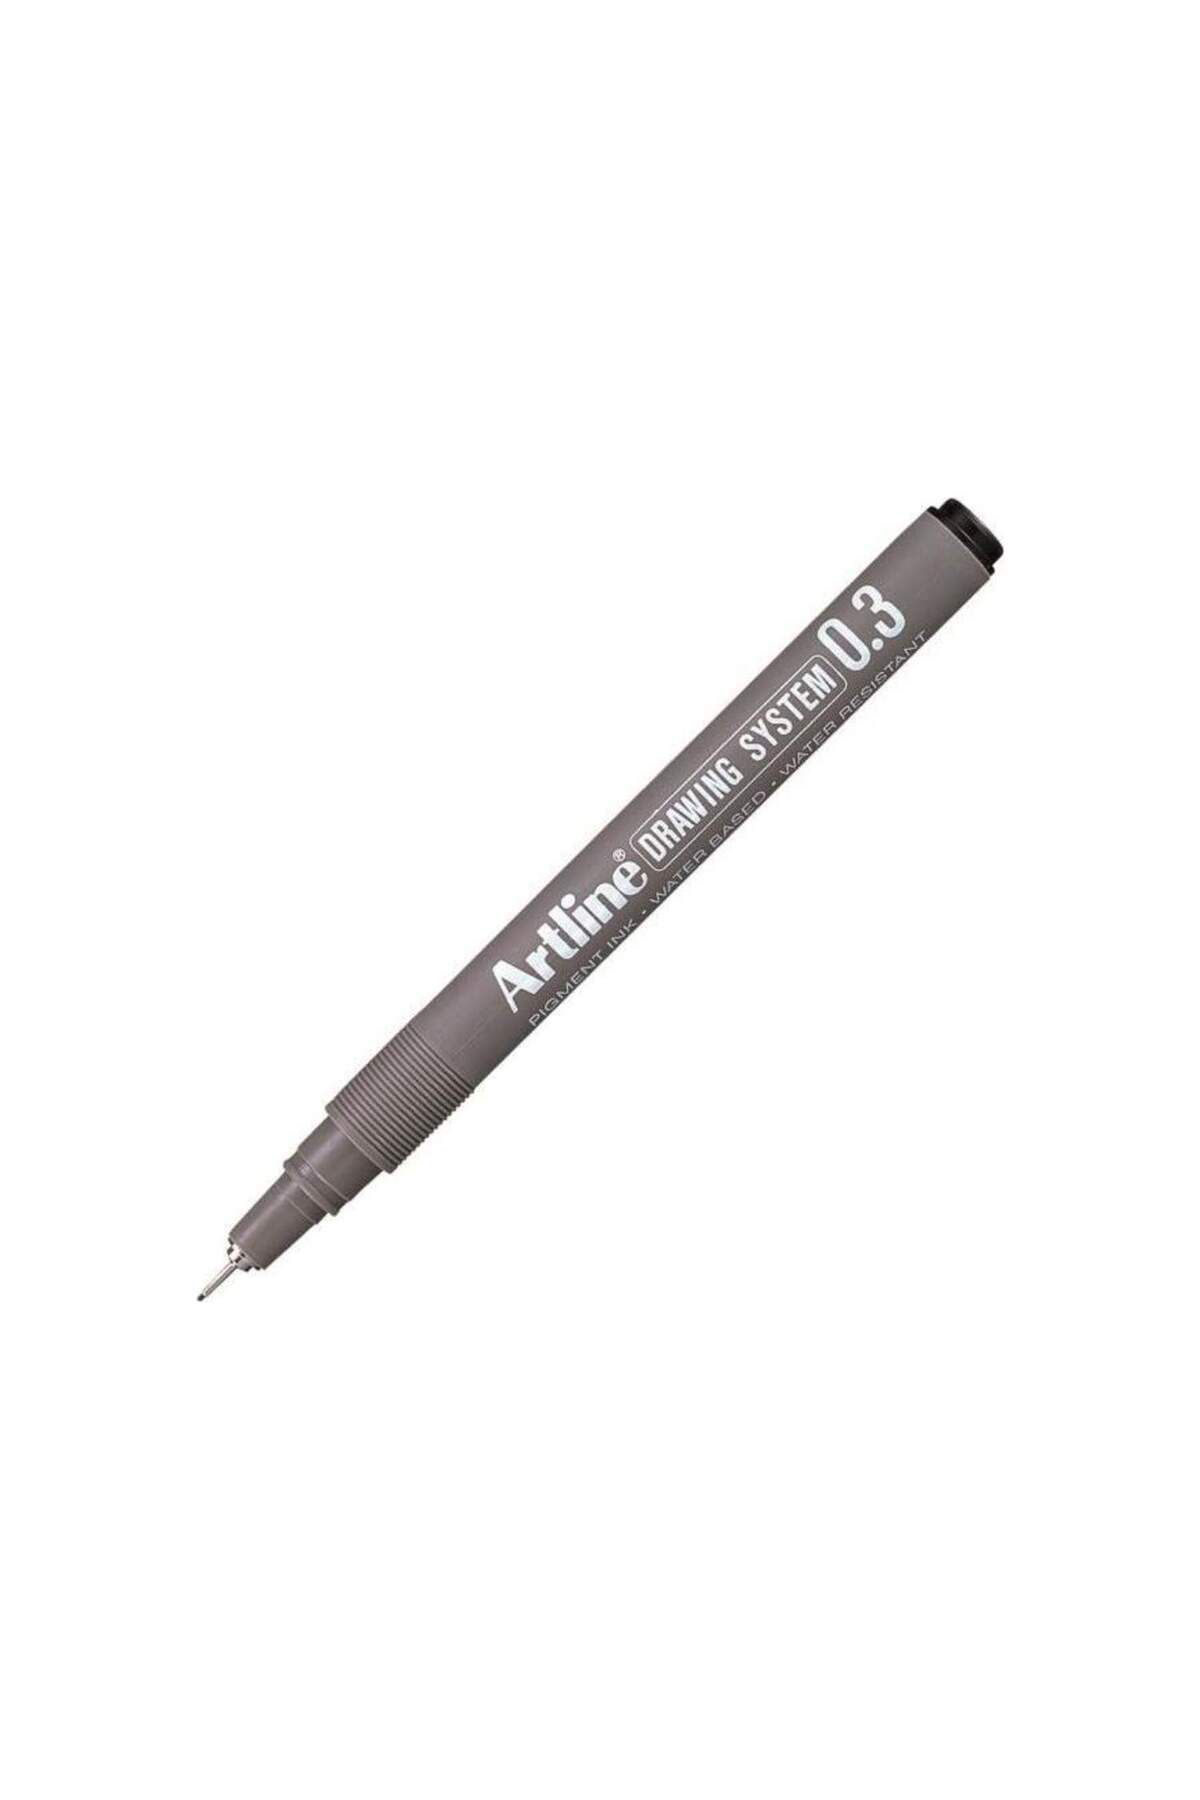 Artline Love Art Skecth Pencil(6 Grades-HB,2B,4B,6B,8B,10B PACK OF 8 :  Amazon.in: Home & Kitchen